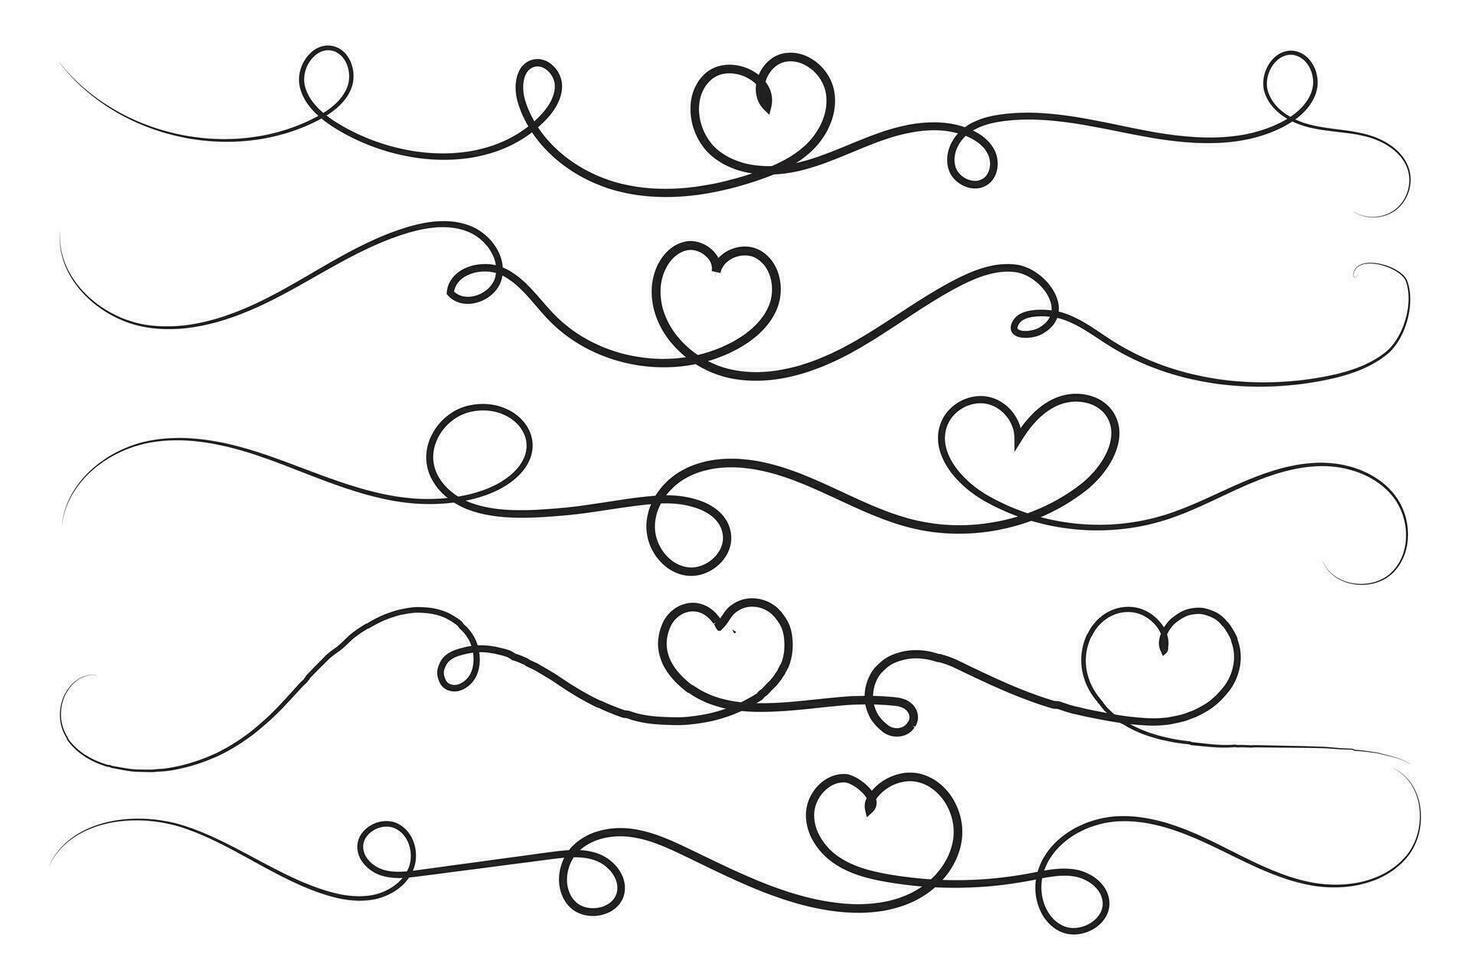 Filigree curly Calligraphic Heart, Fancy Line Flourishes Swirls hearts, curve romantic love sign, Valentines Day divider flourish Swirl, Calligraphy Flourish lettering header hearts scroll vector